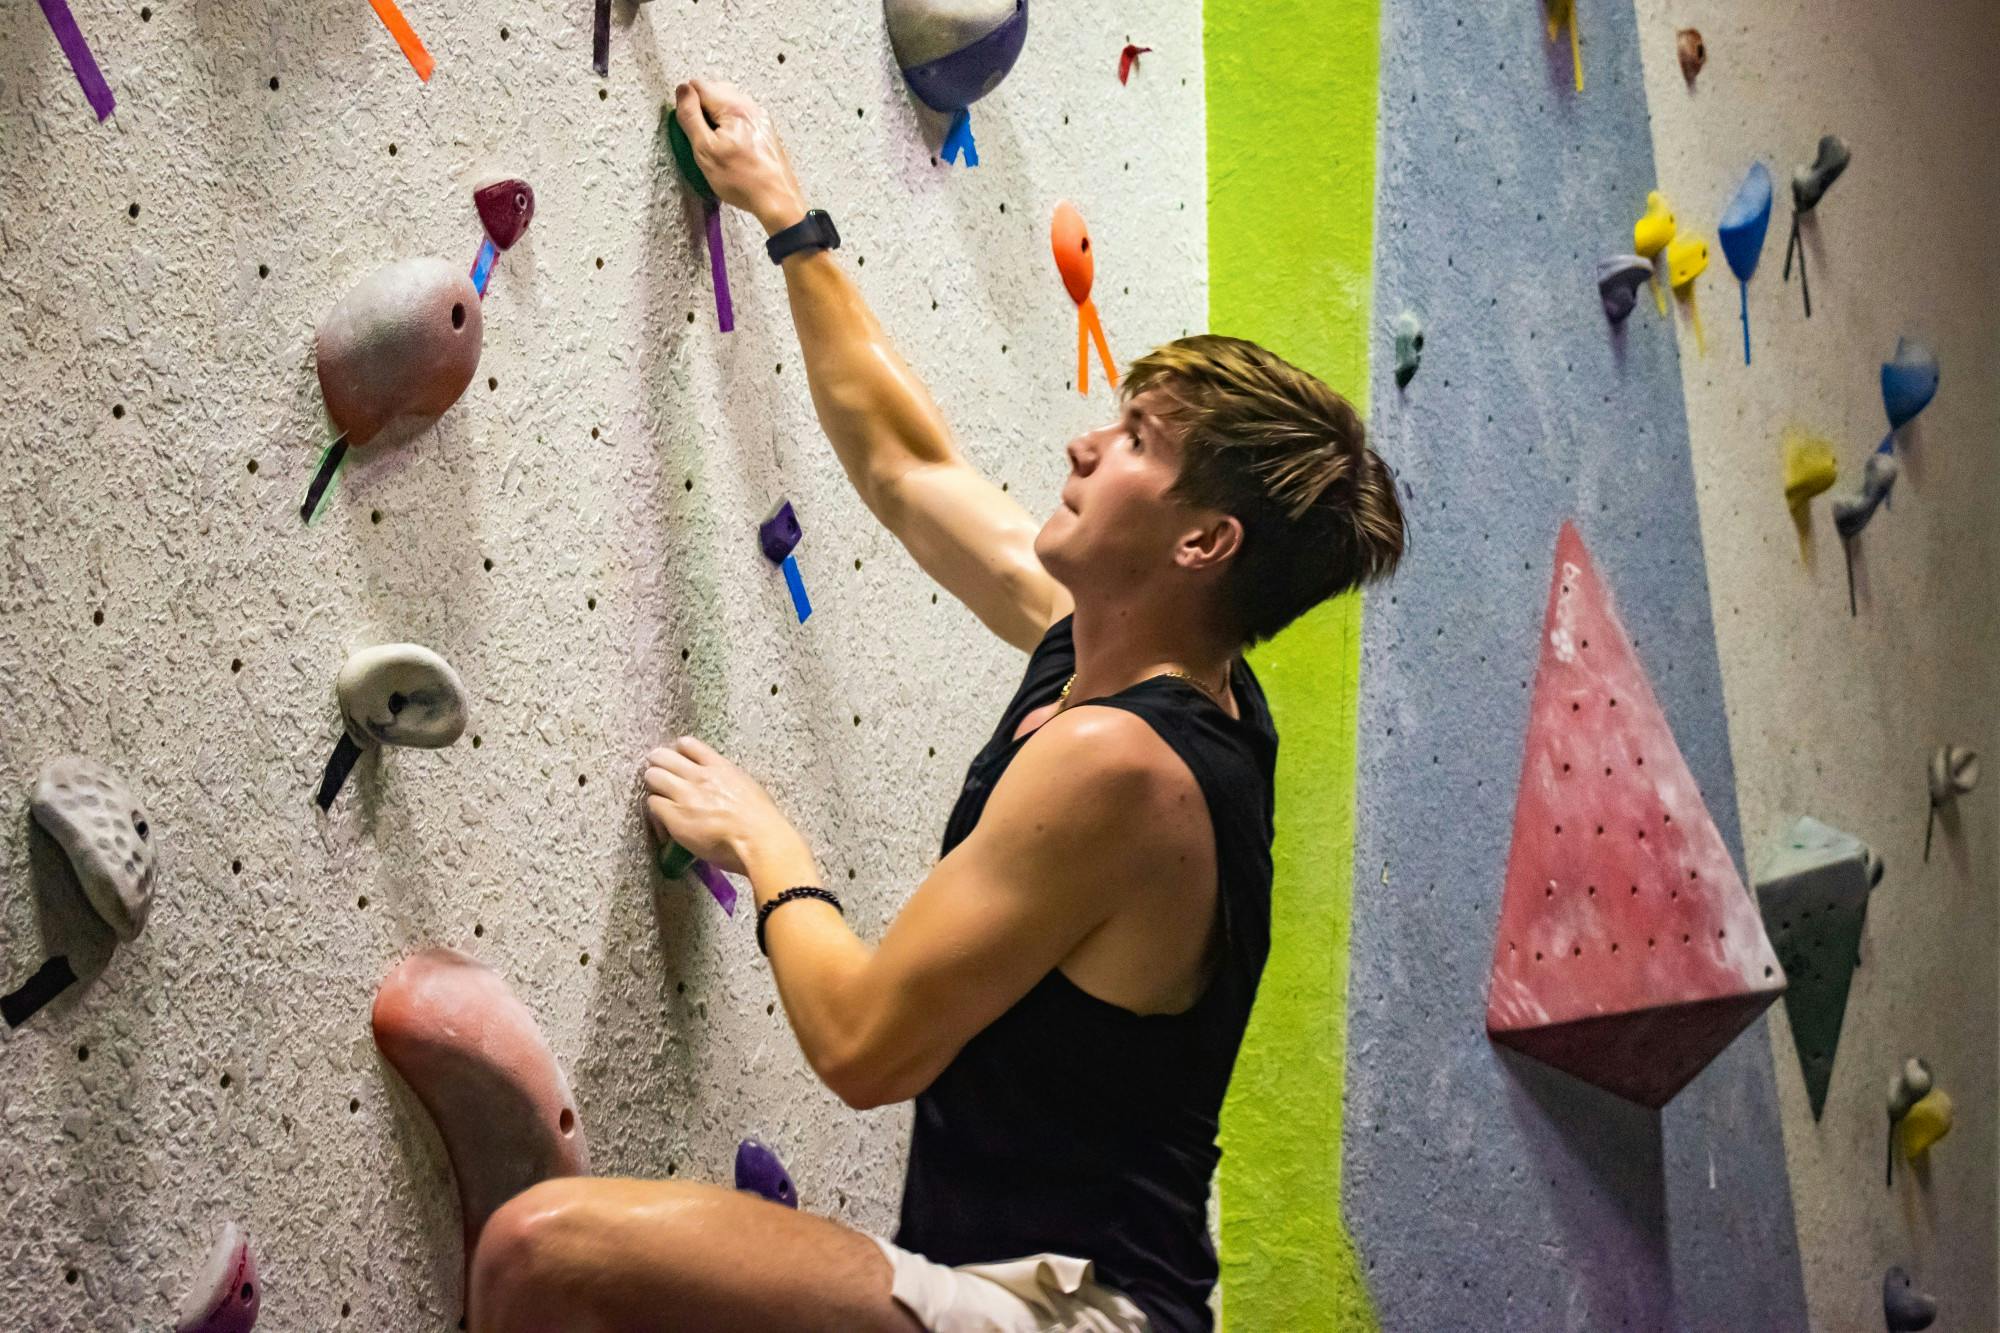 Climbing gym seeks improvement through revised policies, better